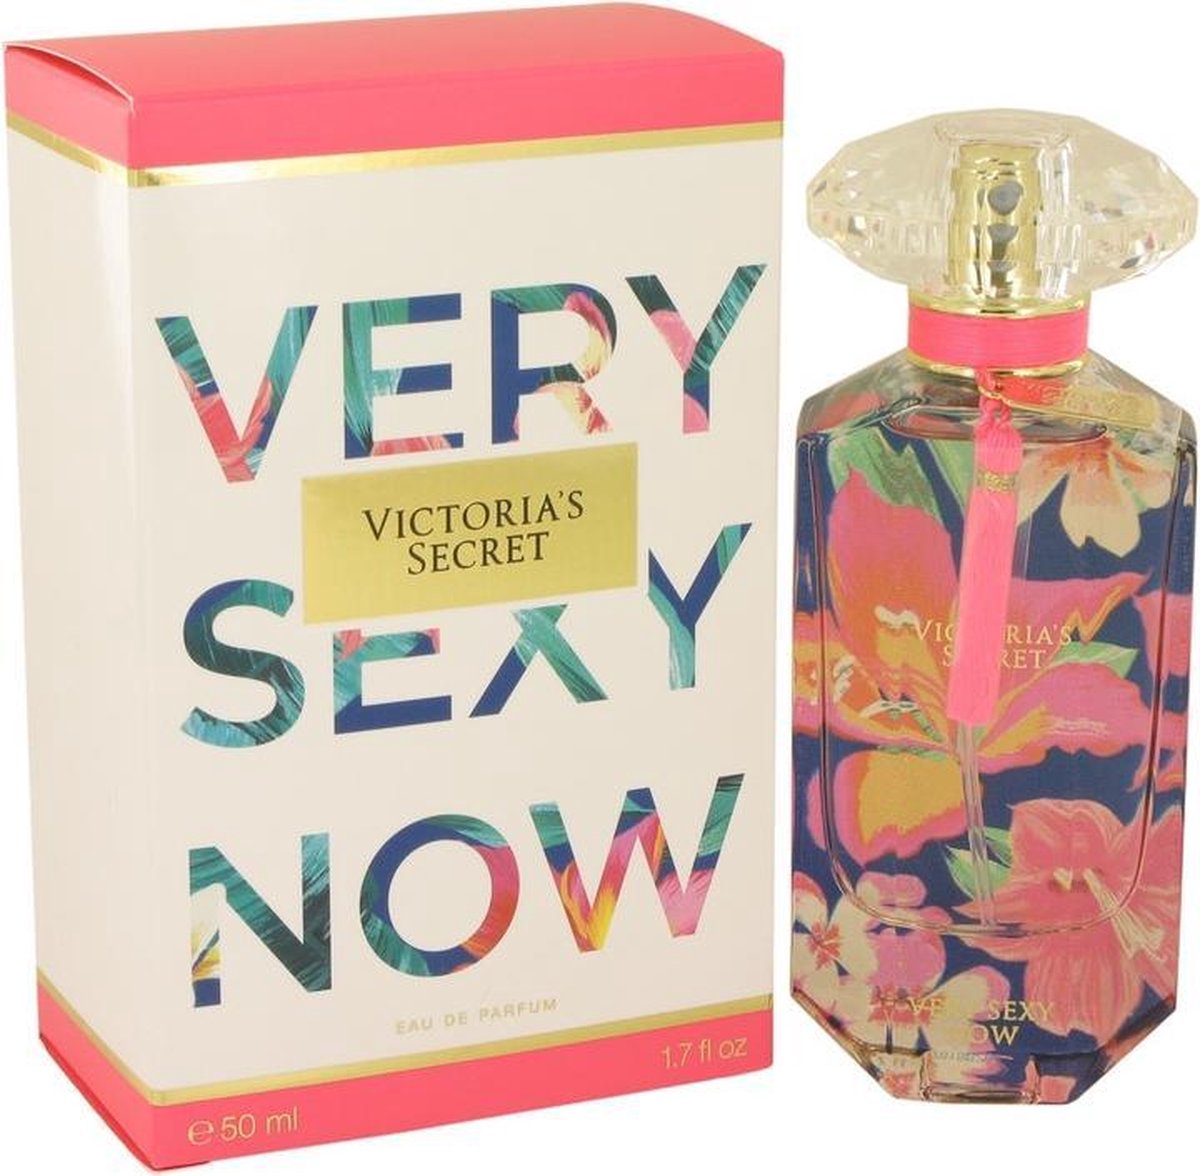 Very Sexy Now by Victoria's Secret 50 ml - Eau De Parfum Spray (2017 Edition)